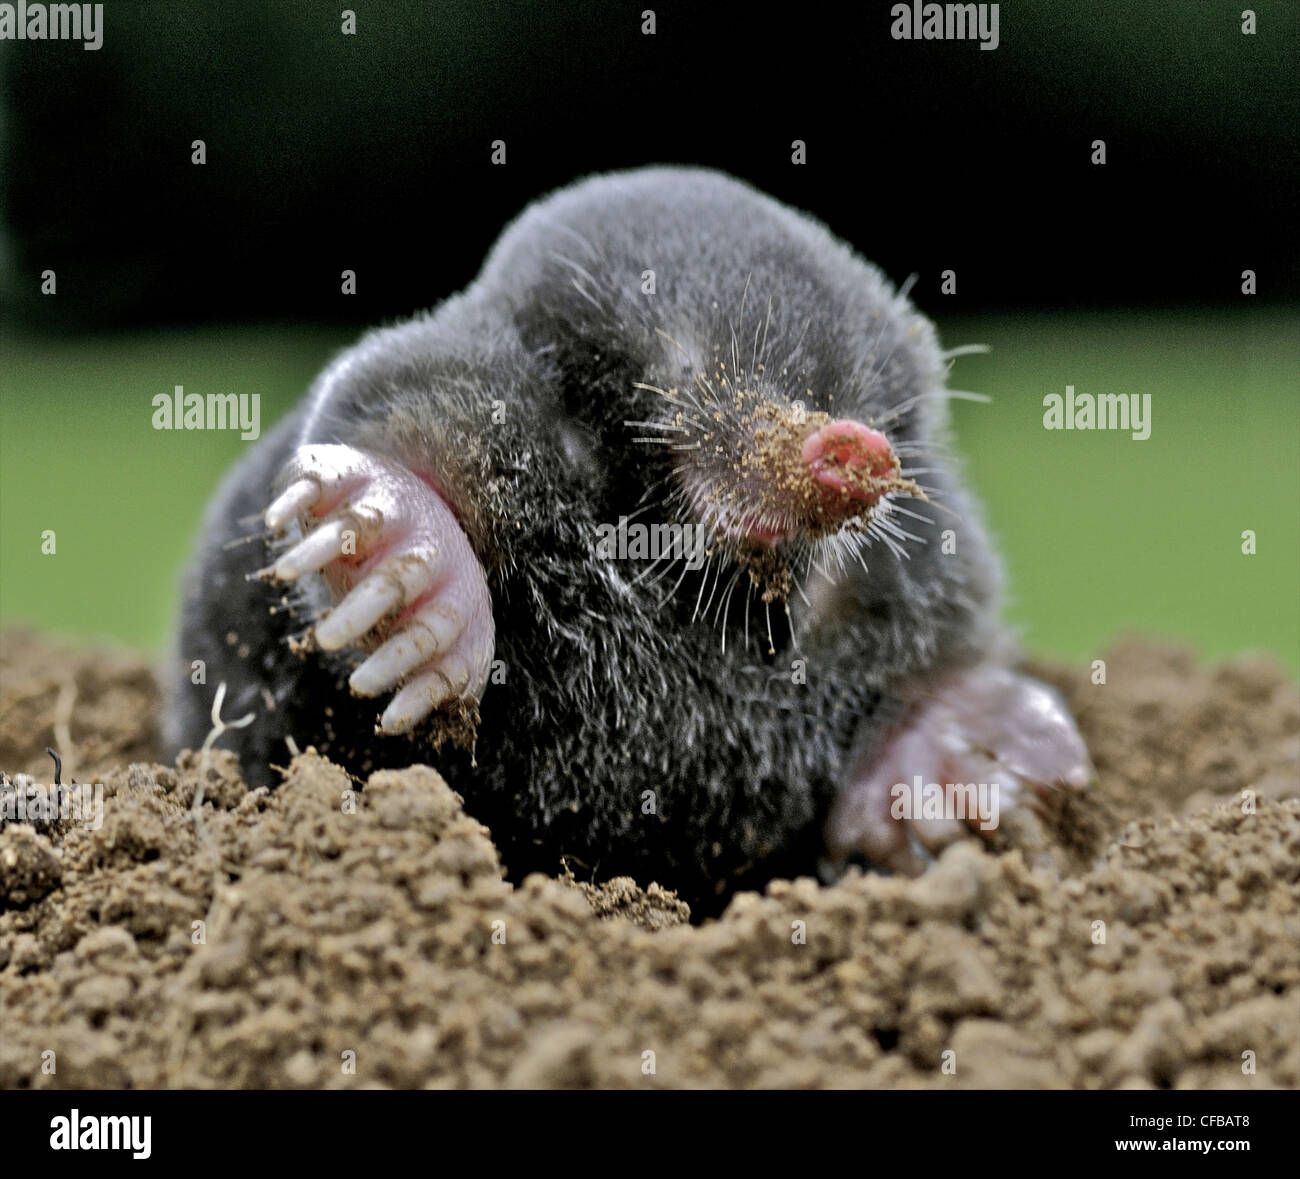 Mole (talpa europaea) animal rarely seen above ground. Stock Photo